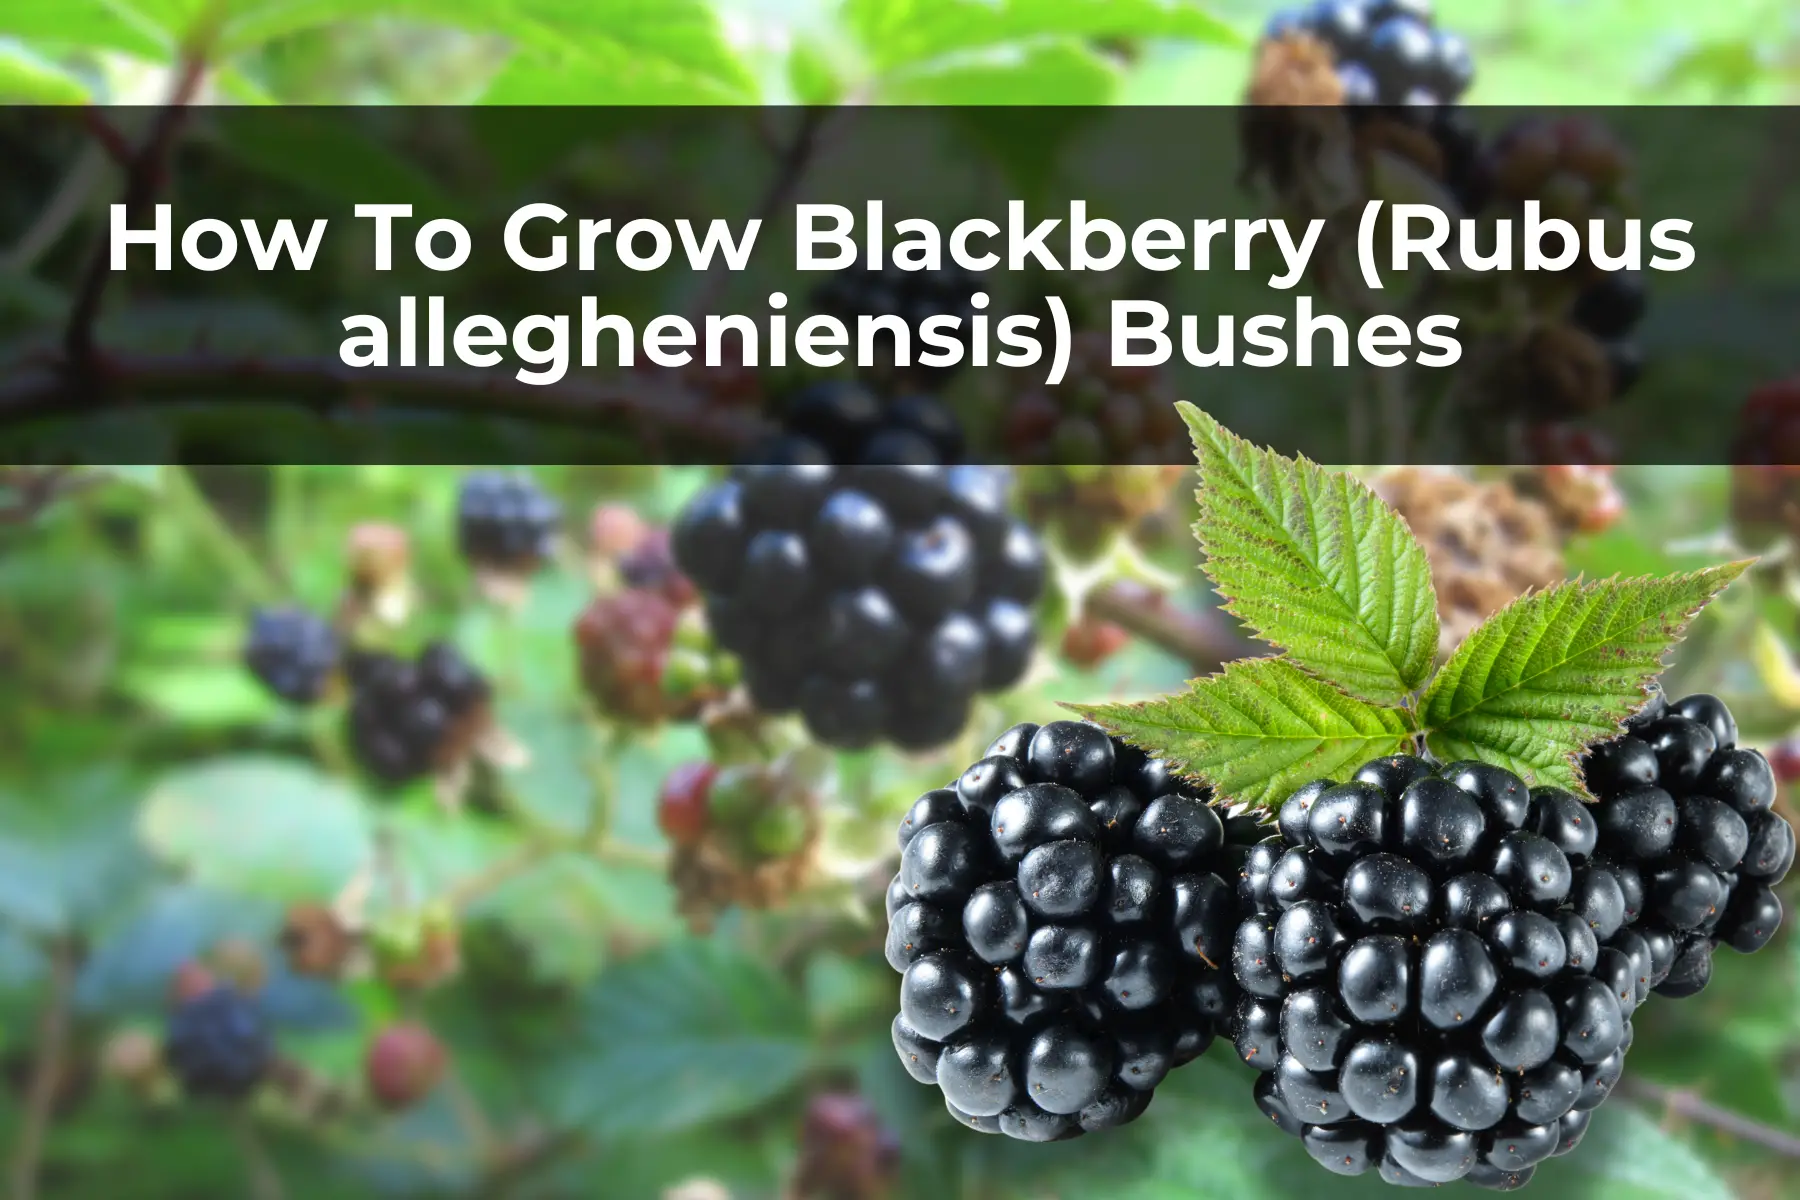 How To Grow Blackberry (Rubus allegheniensis) Bushes